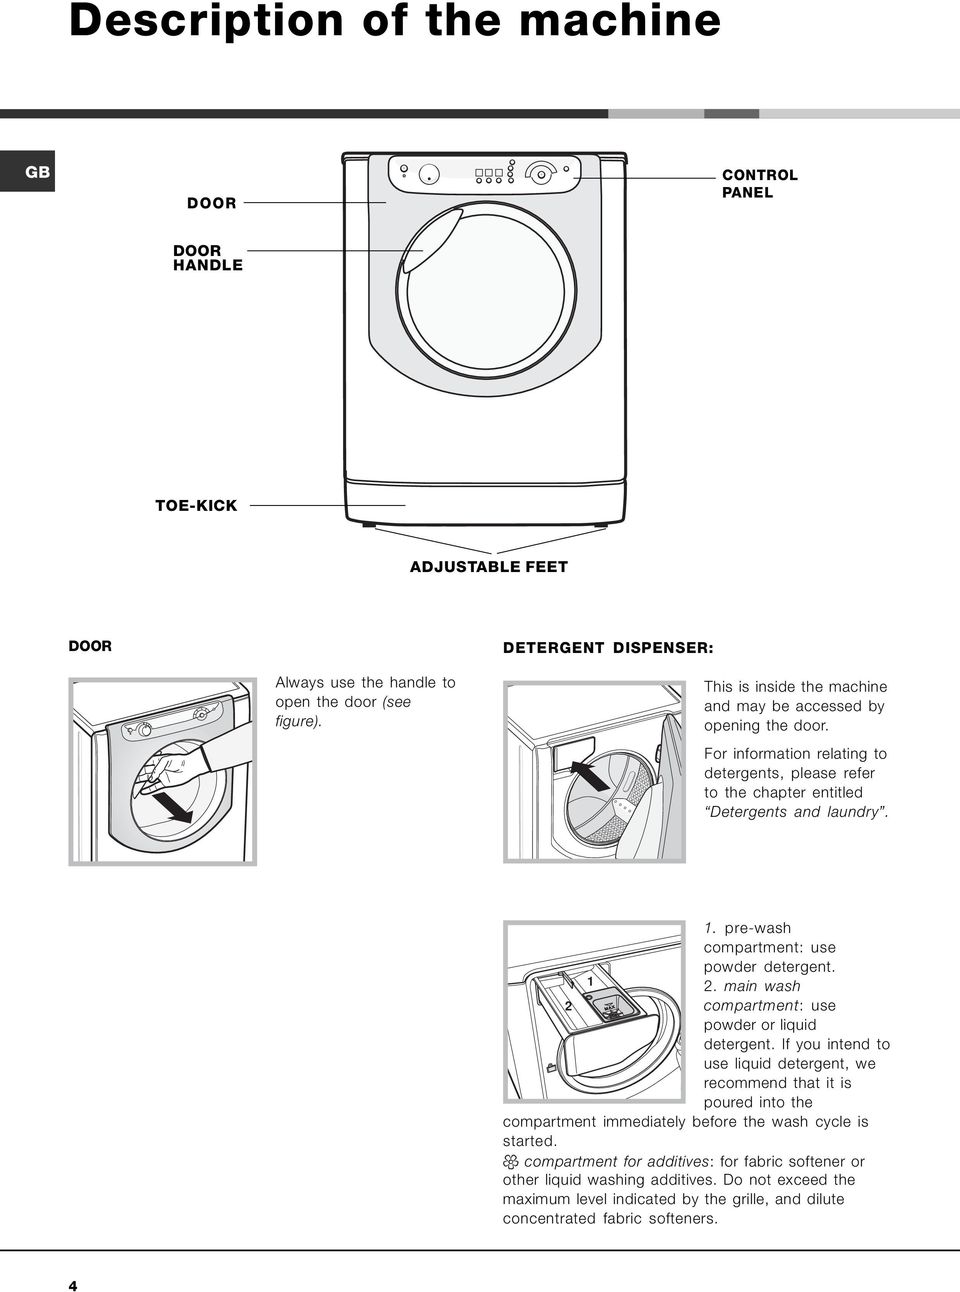 pre-wash compartment: use powder detergent. 1 2. main wash 2 compartment: use powder or liquid detergent.